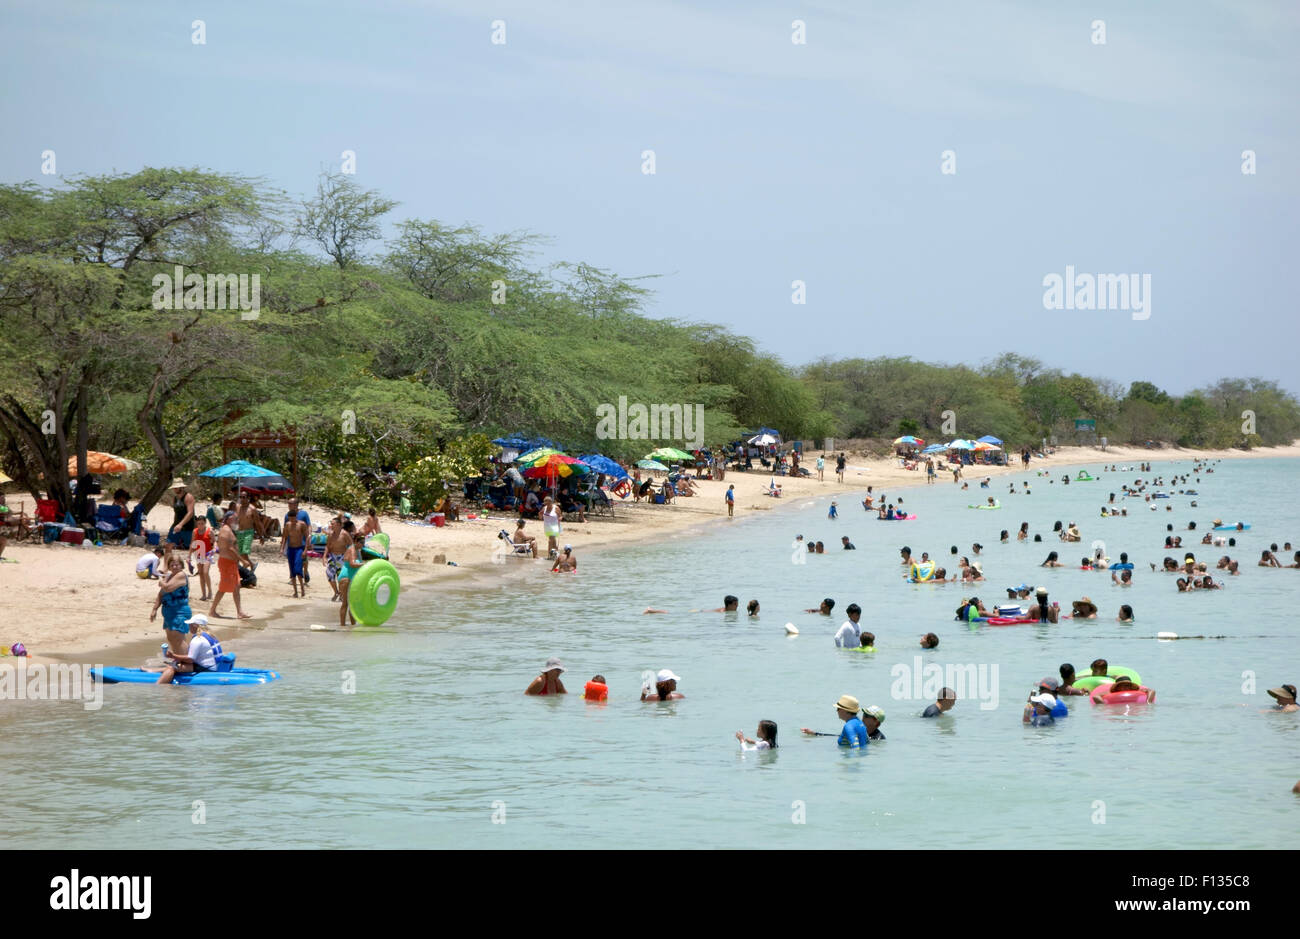 Puerto rico caribbean sea bathing fotografías e imágenes de alta resolución  - Alamy